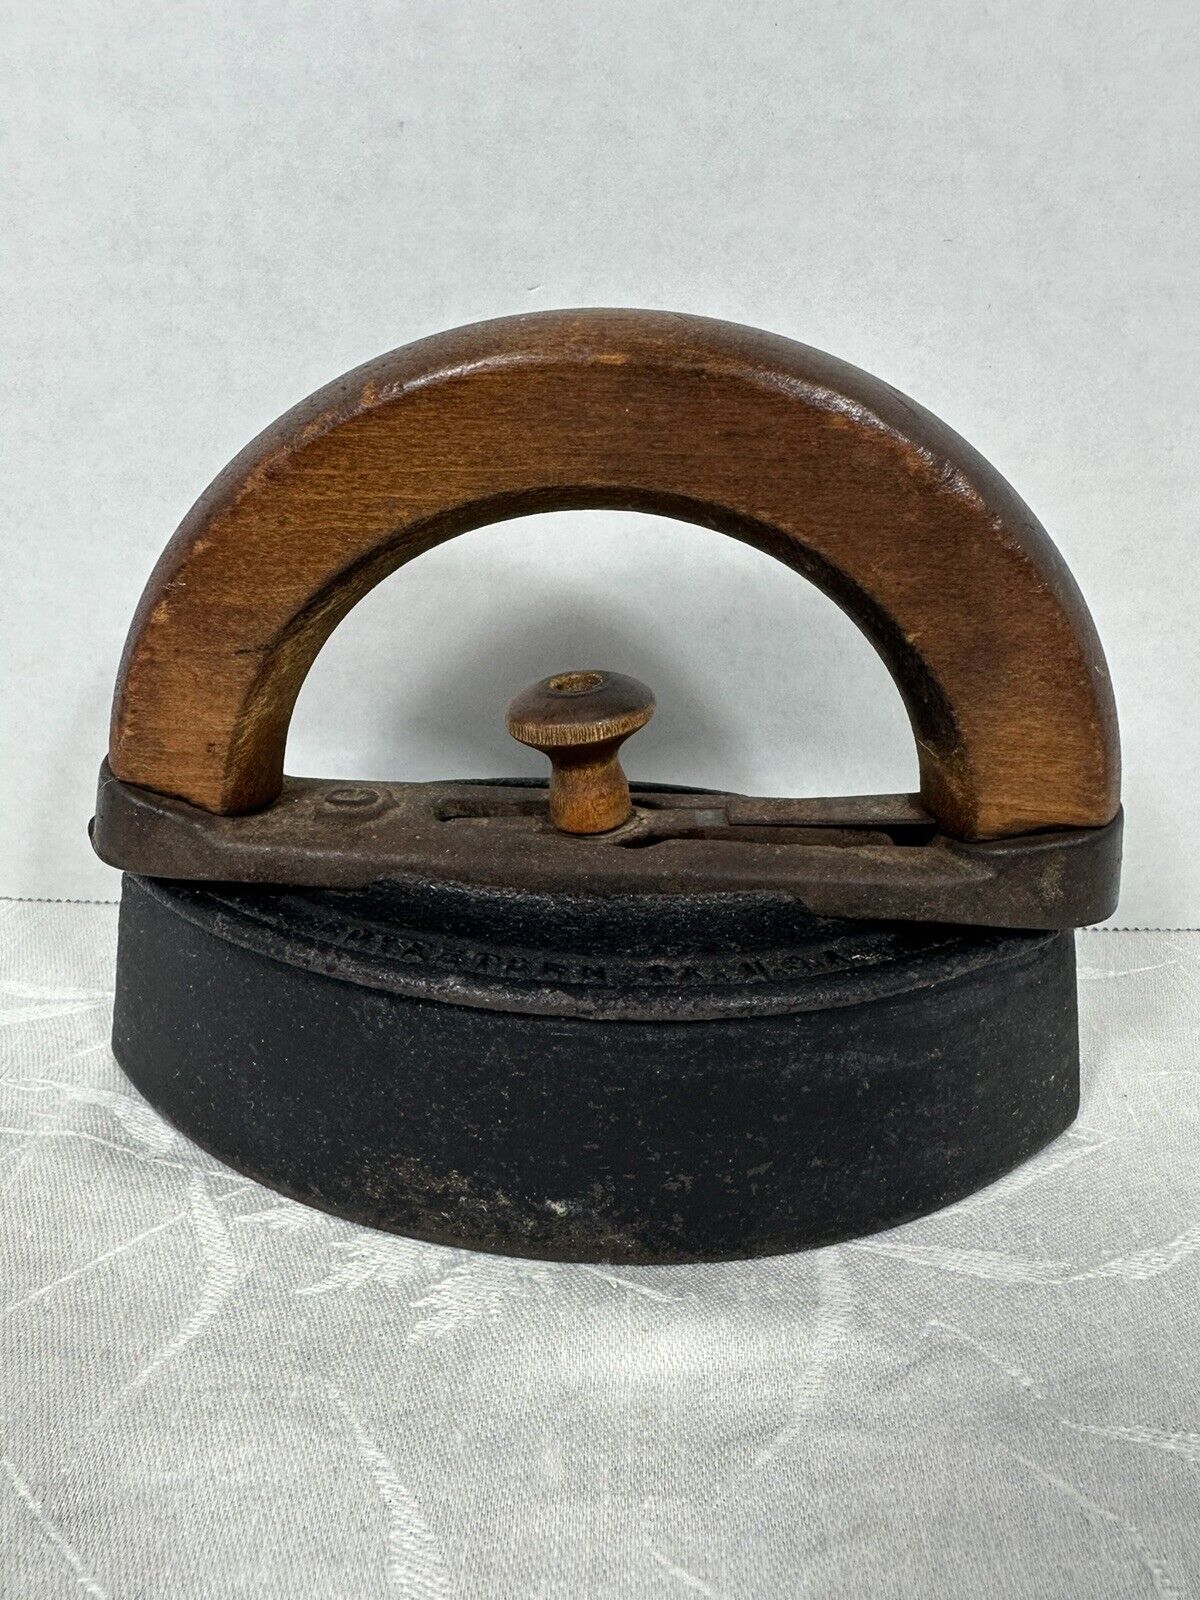 Colebrookdale Iron Co. Antique Sad Iron #1 with Detachable Handle